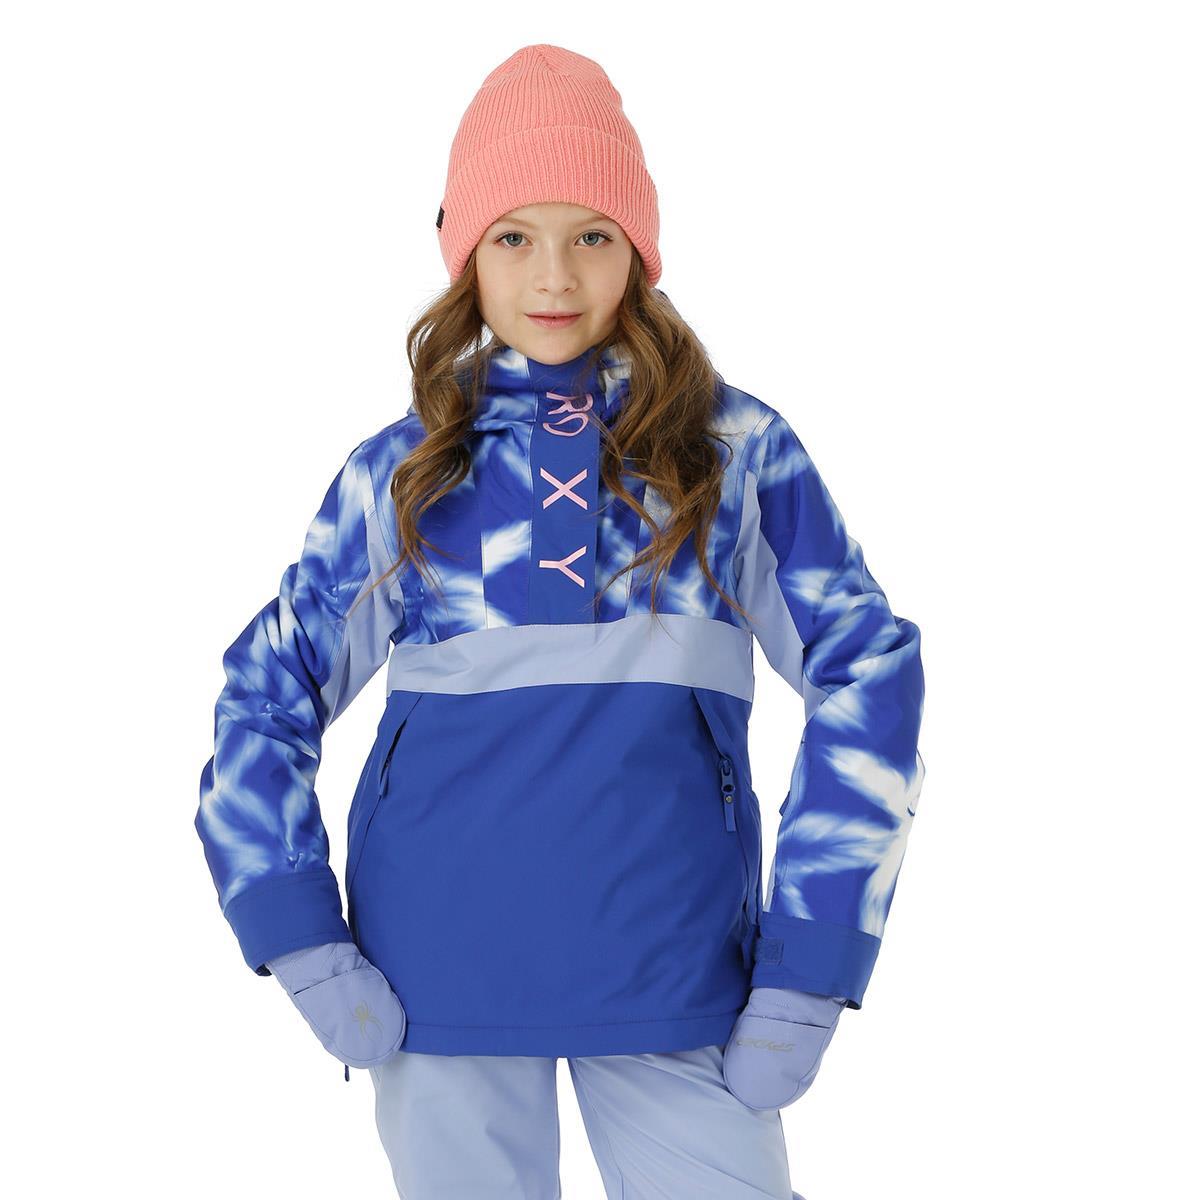 Roxy Shelter women's ski jacket review